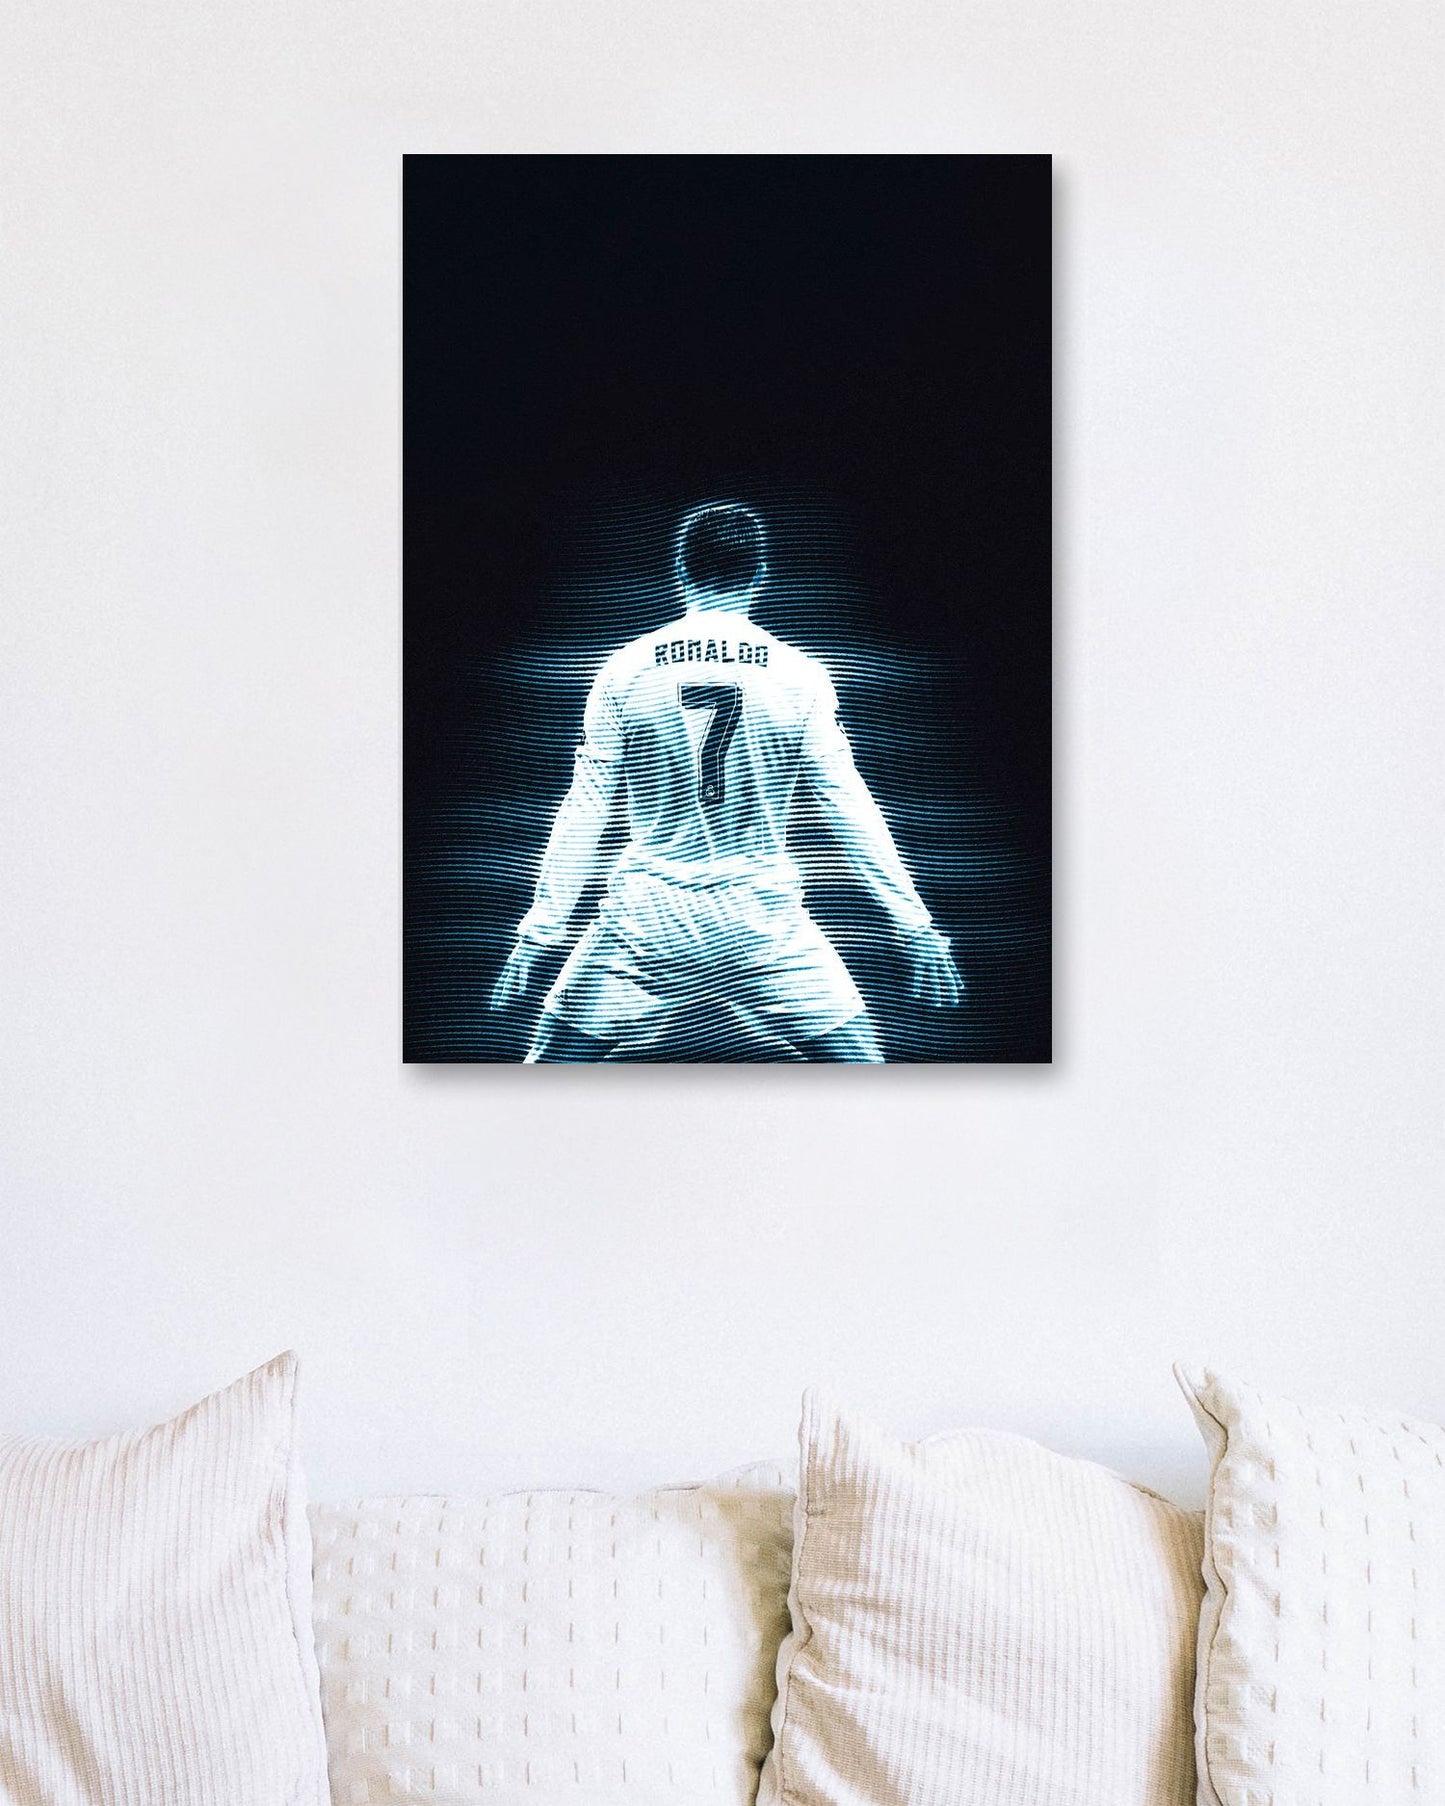 Cristiano Ronaldo - @Mobilunik